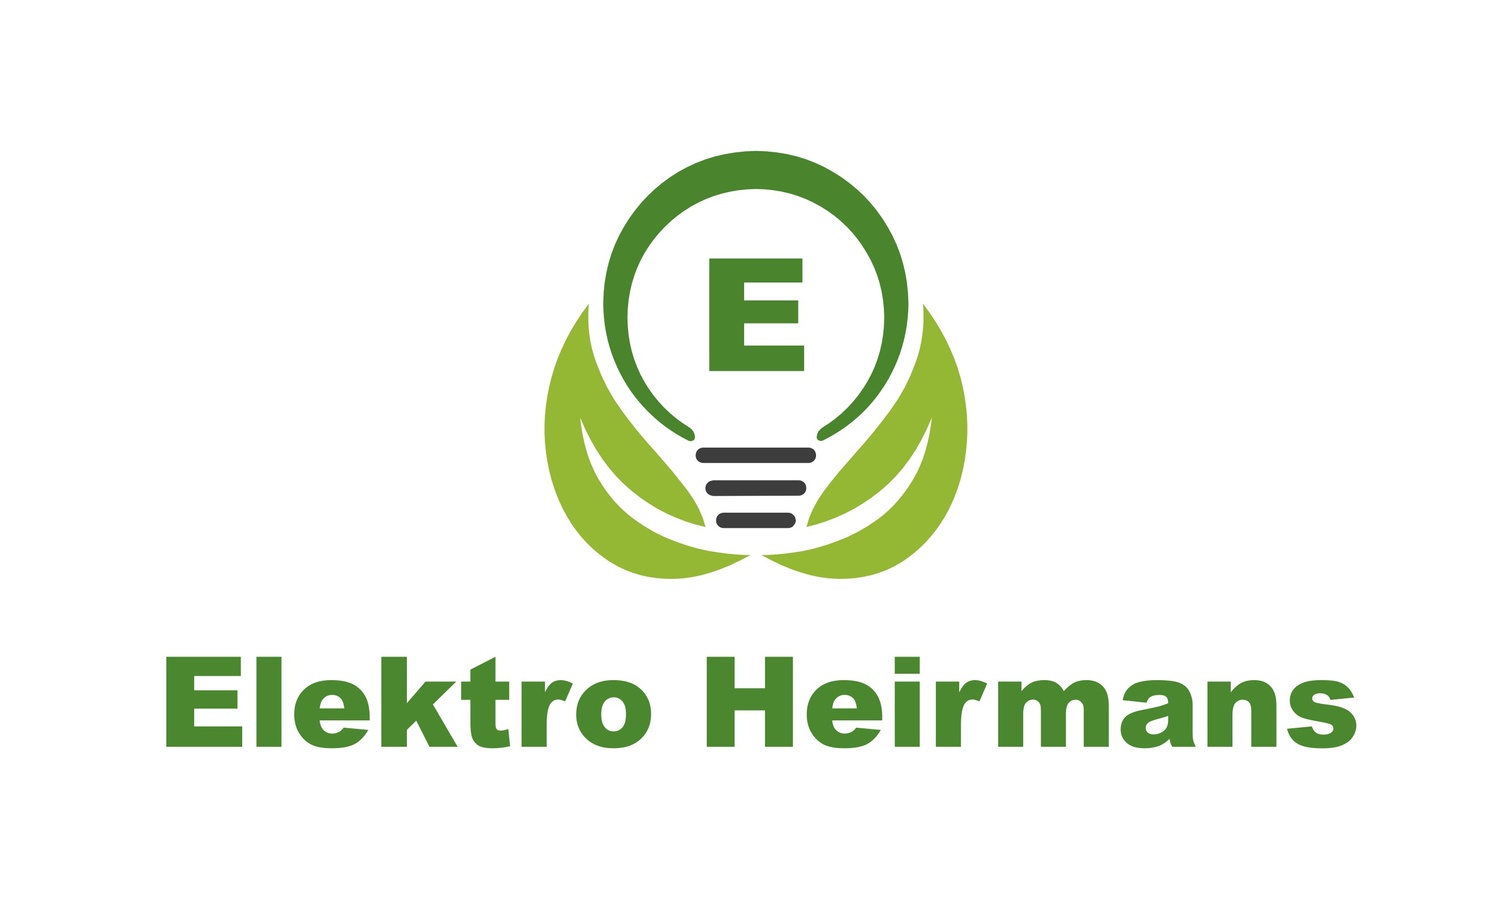 Elektro Heirmans logo